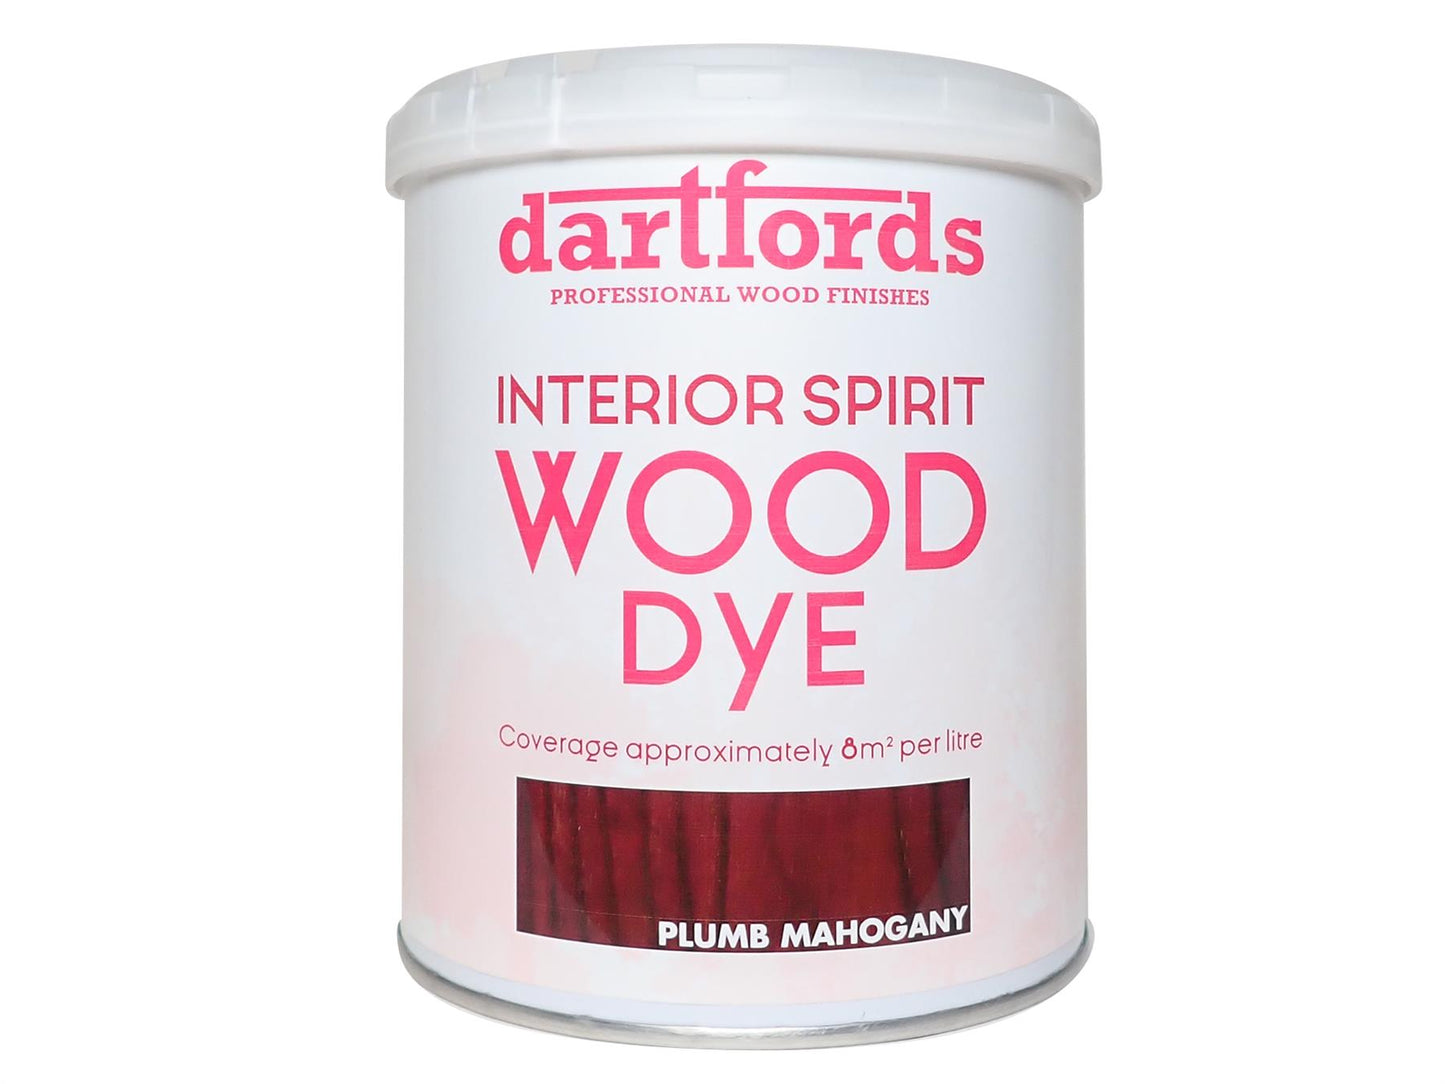 dartfords Plum Mahogany Interior Spirit Based Wood Dye - 1 litre Tin